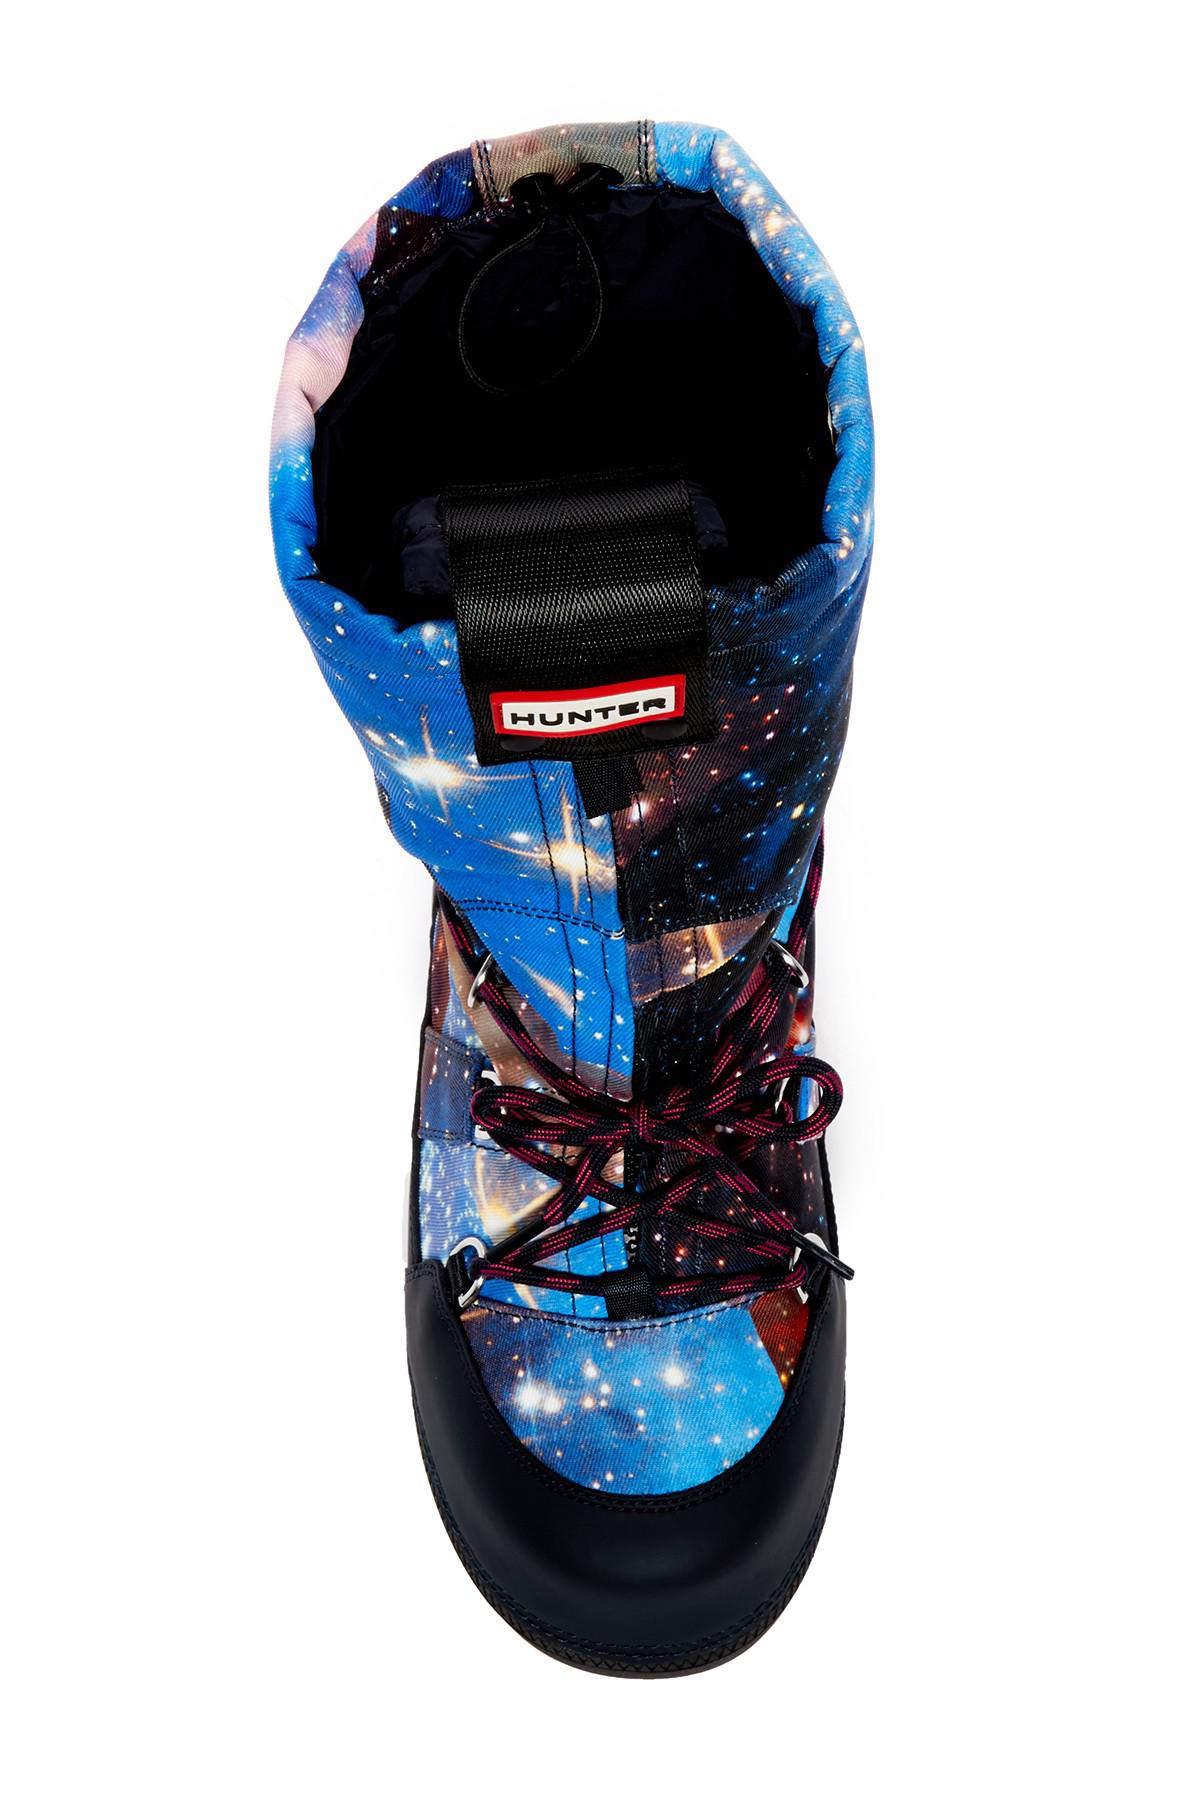 hunter galaxy boots